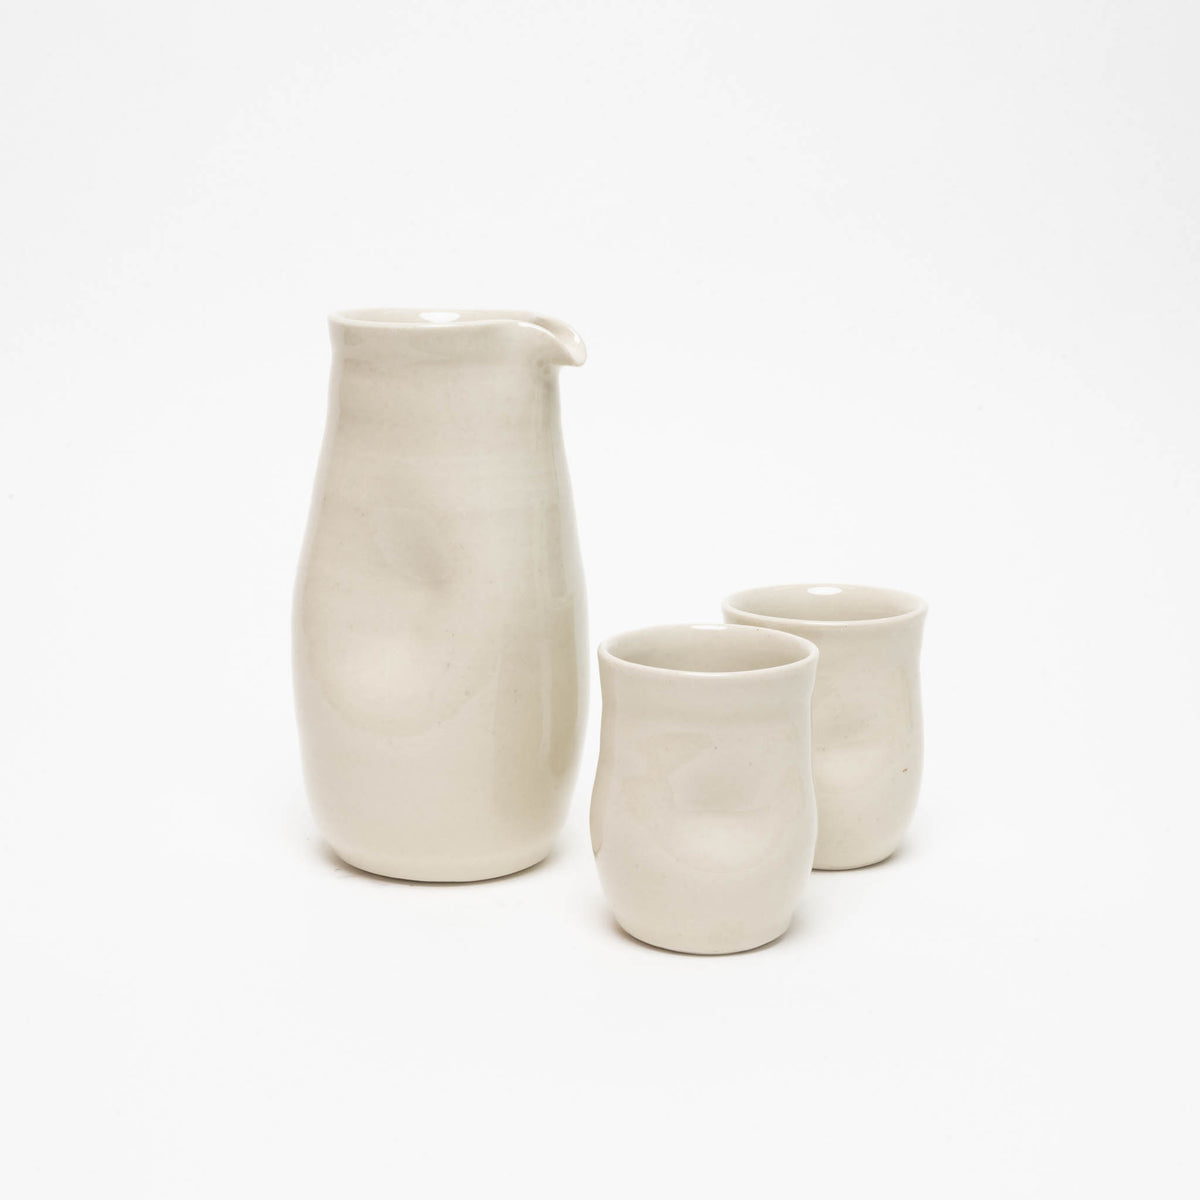 Natural porcelain mug with recessed grip high